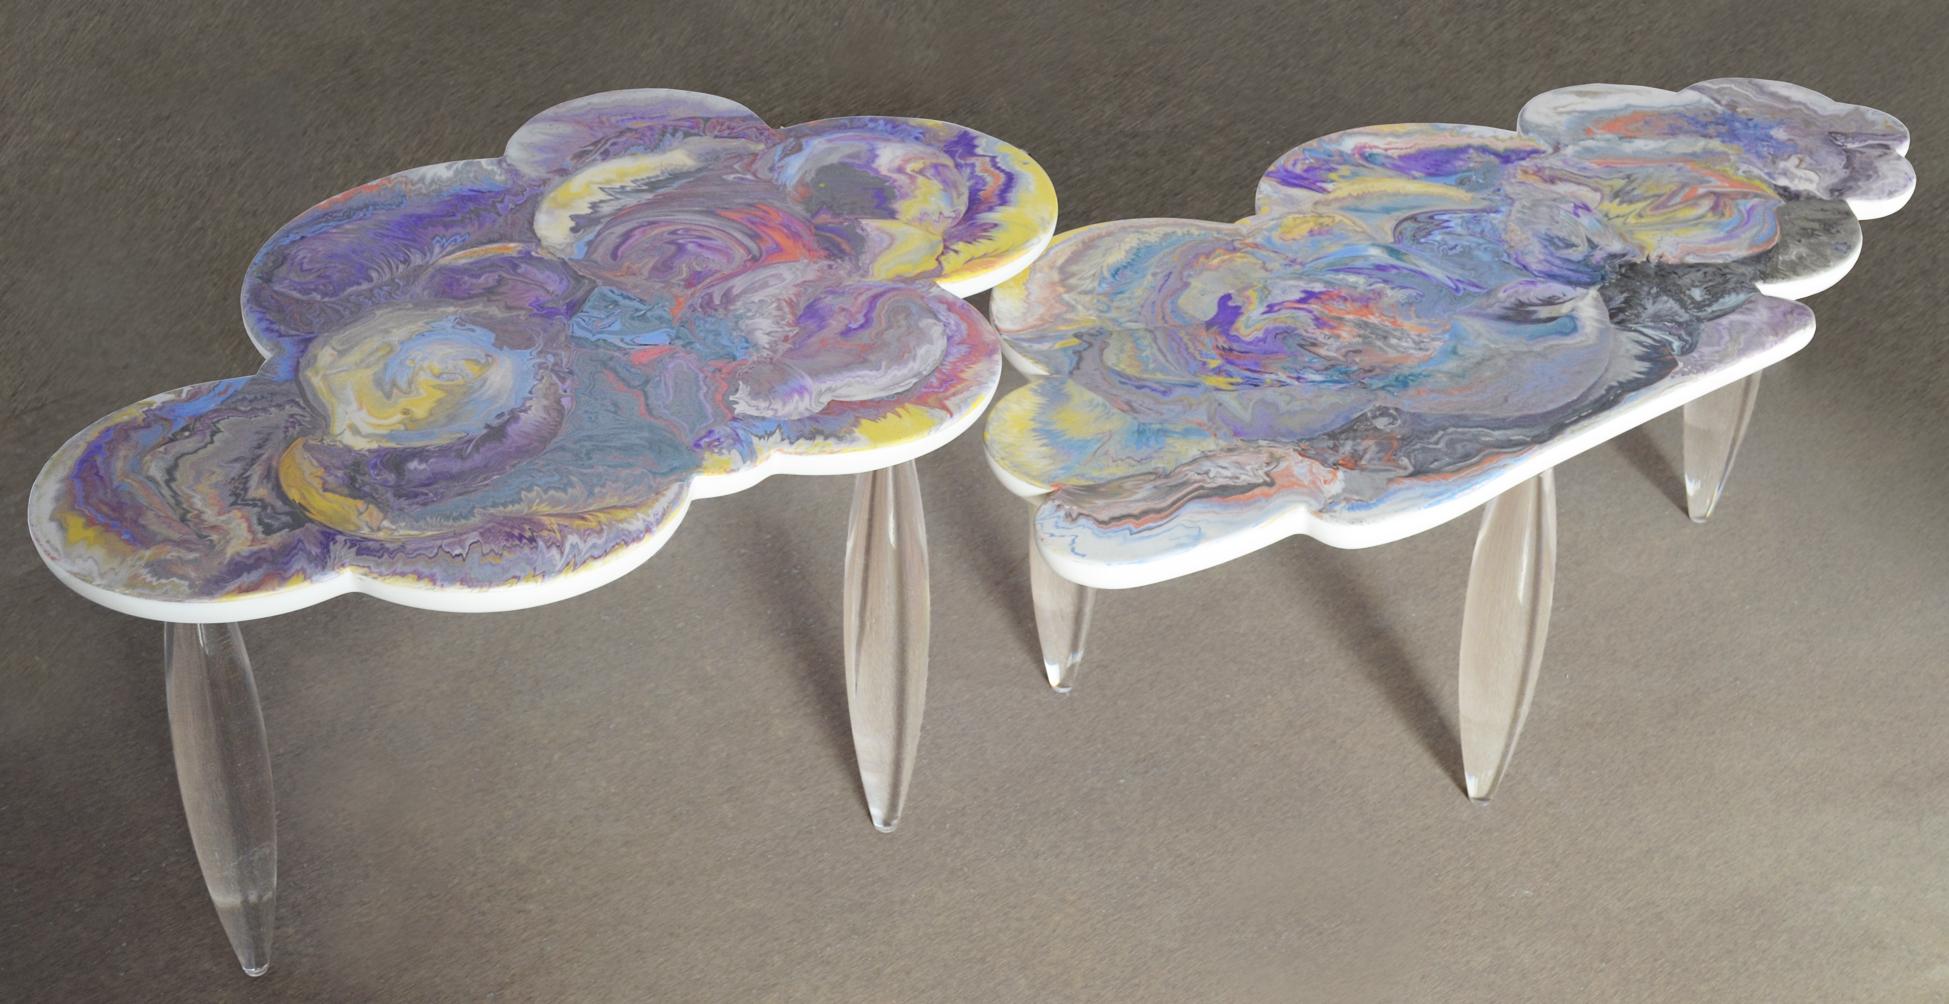 Hand-Crafted Cupioli Cloud Coffee Table Scagliola art top  plexiglass legs handmade in Italy